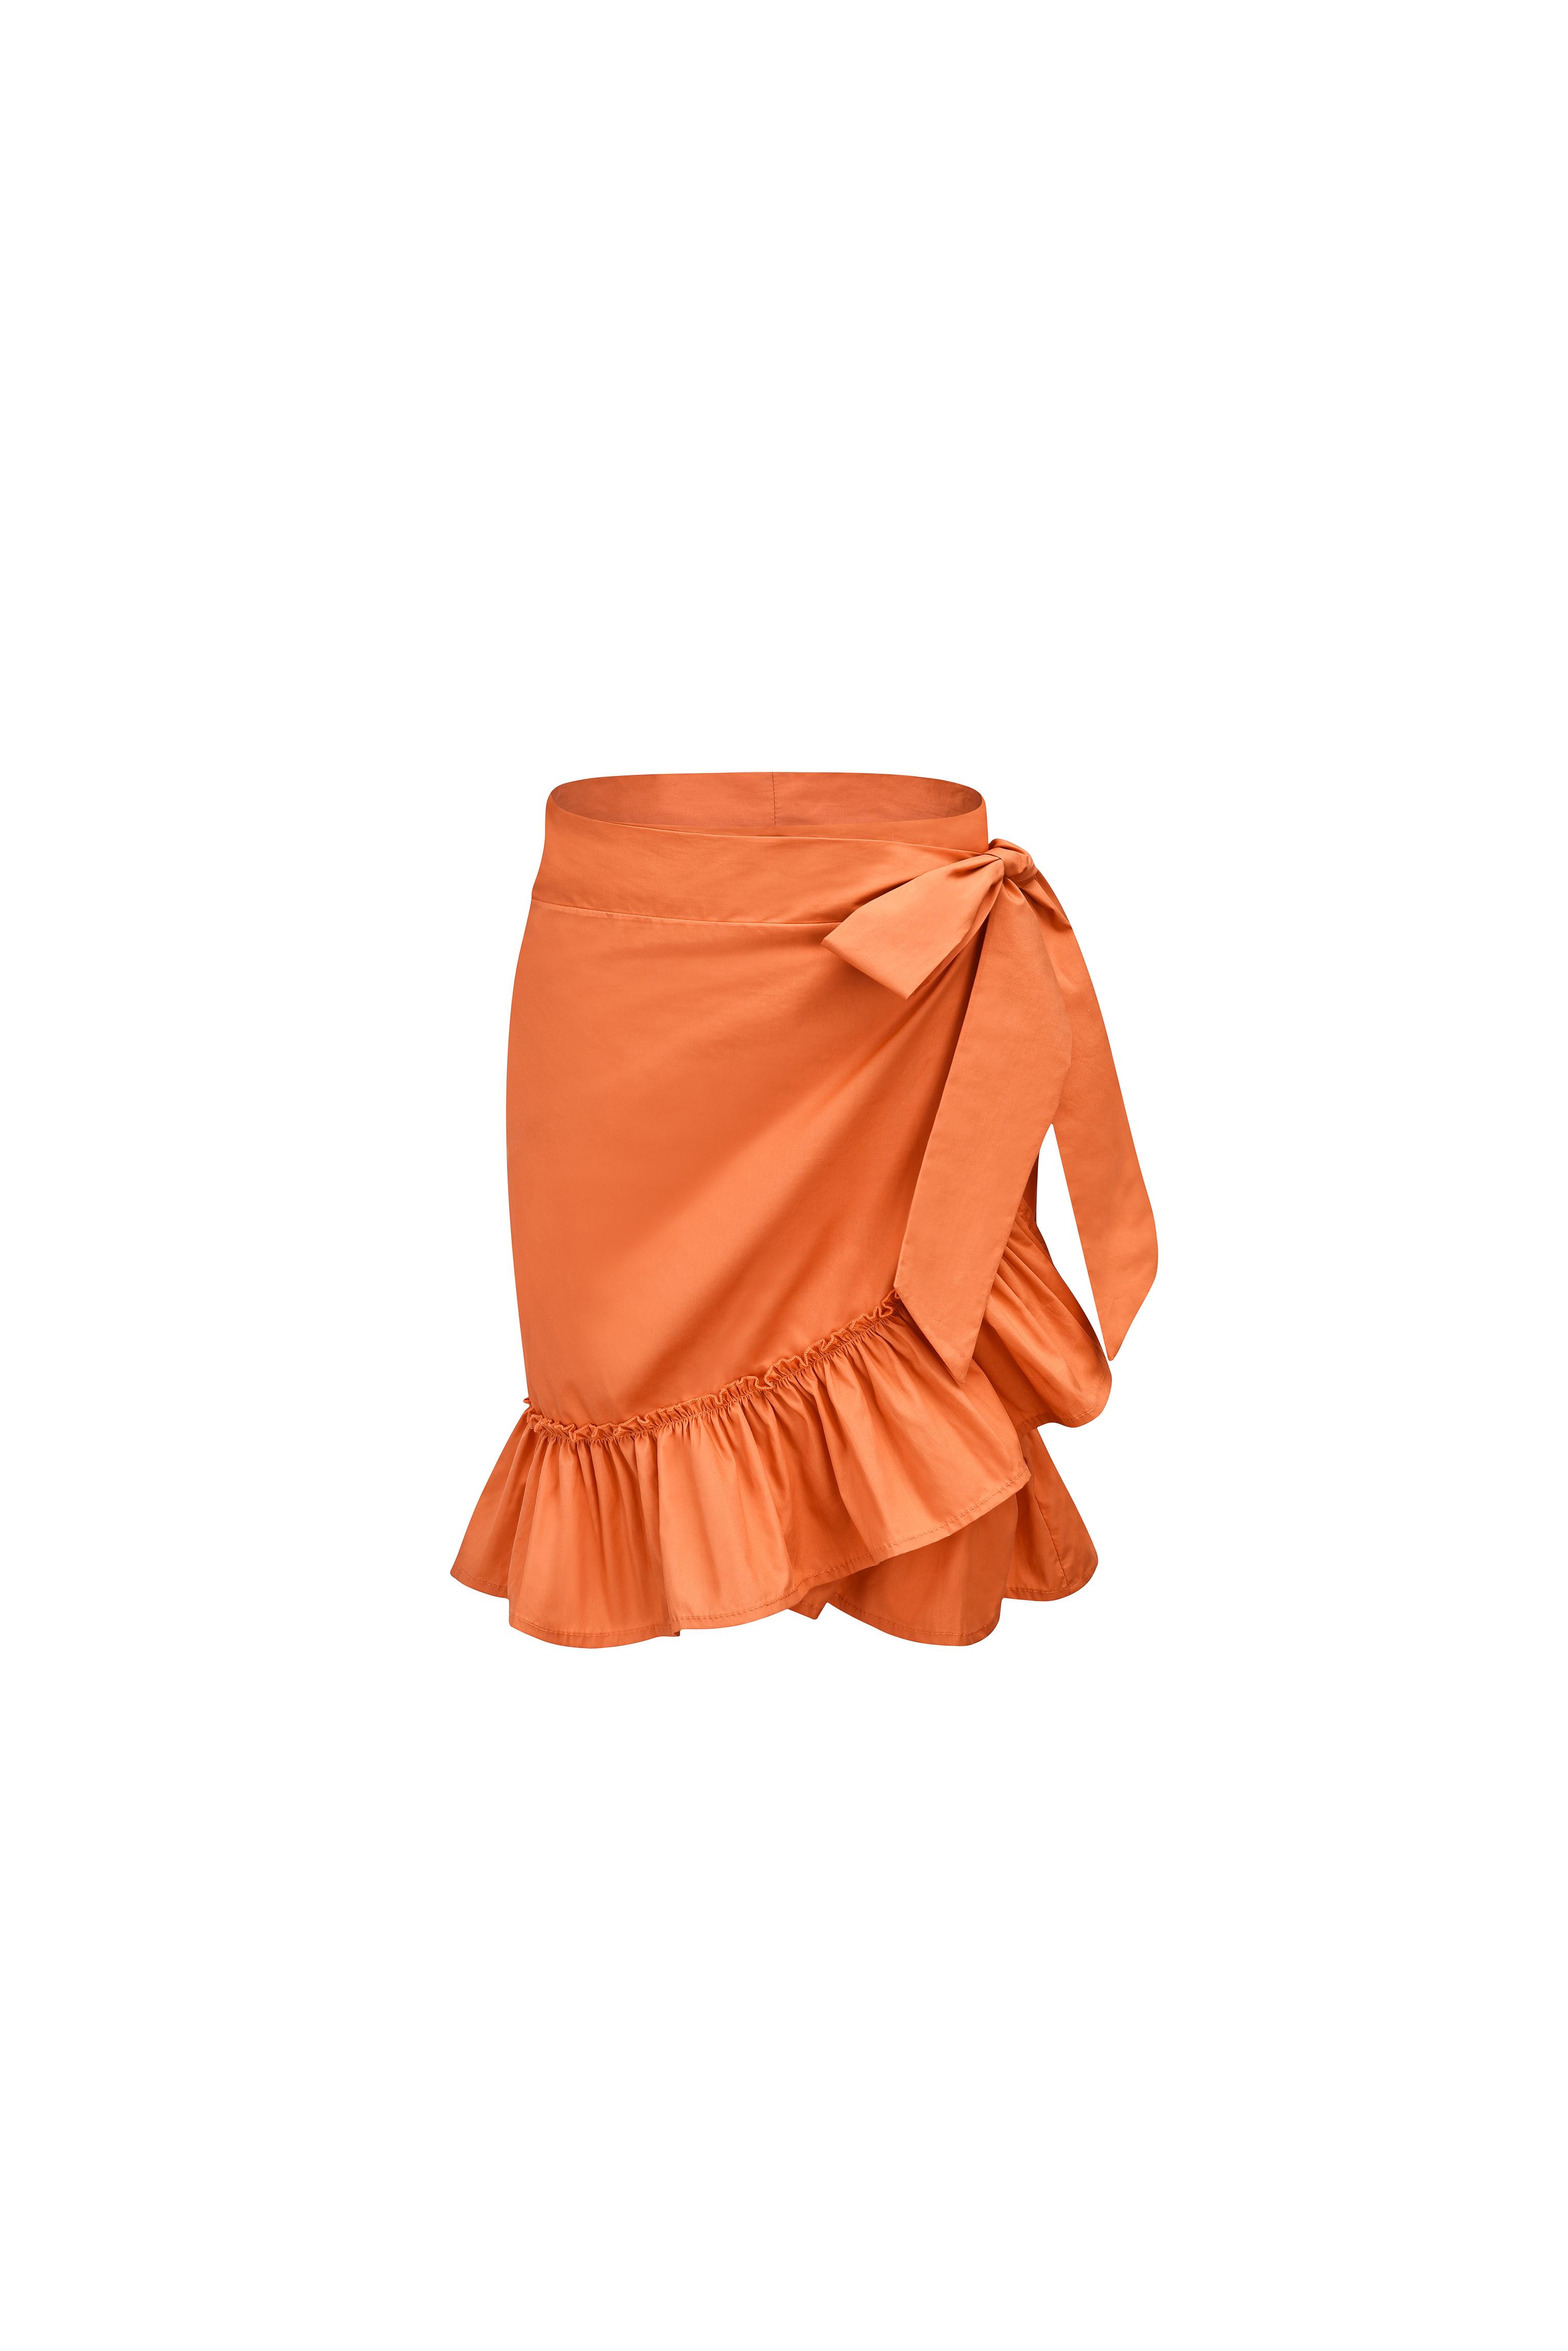 Amy Lynn Stevie Orange Wrap Mini Skirt | Lyst